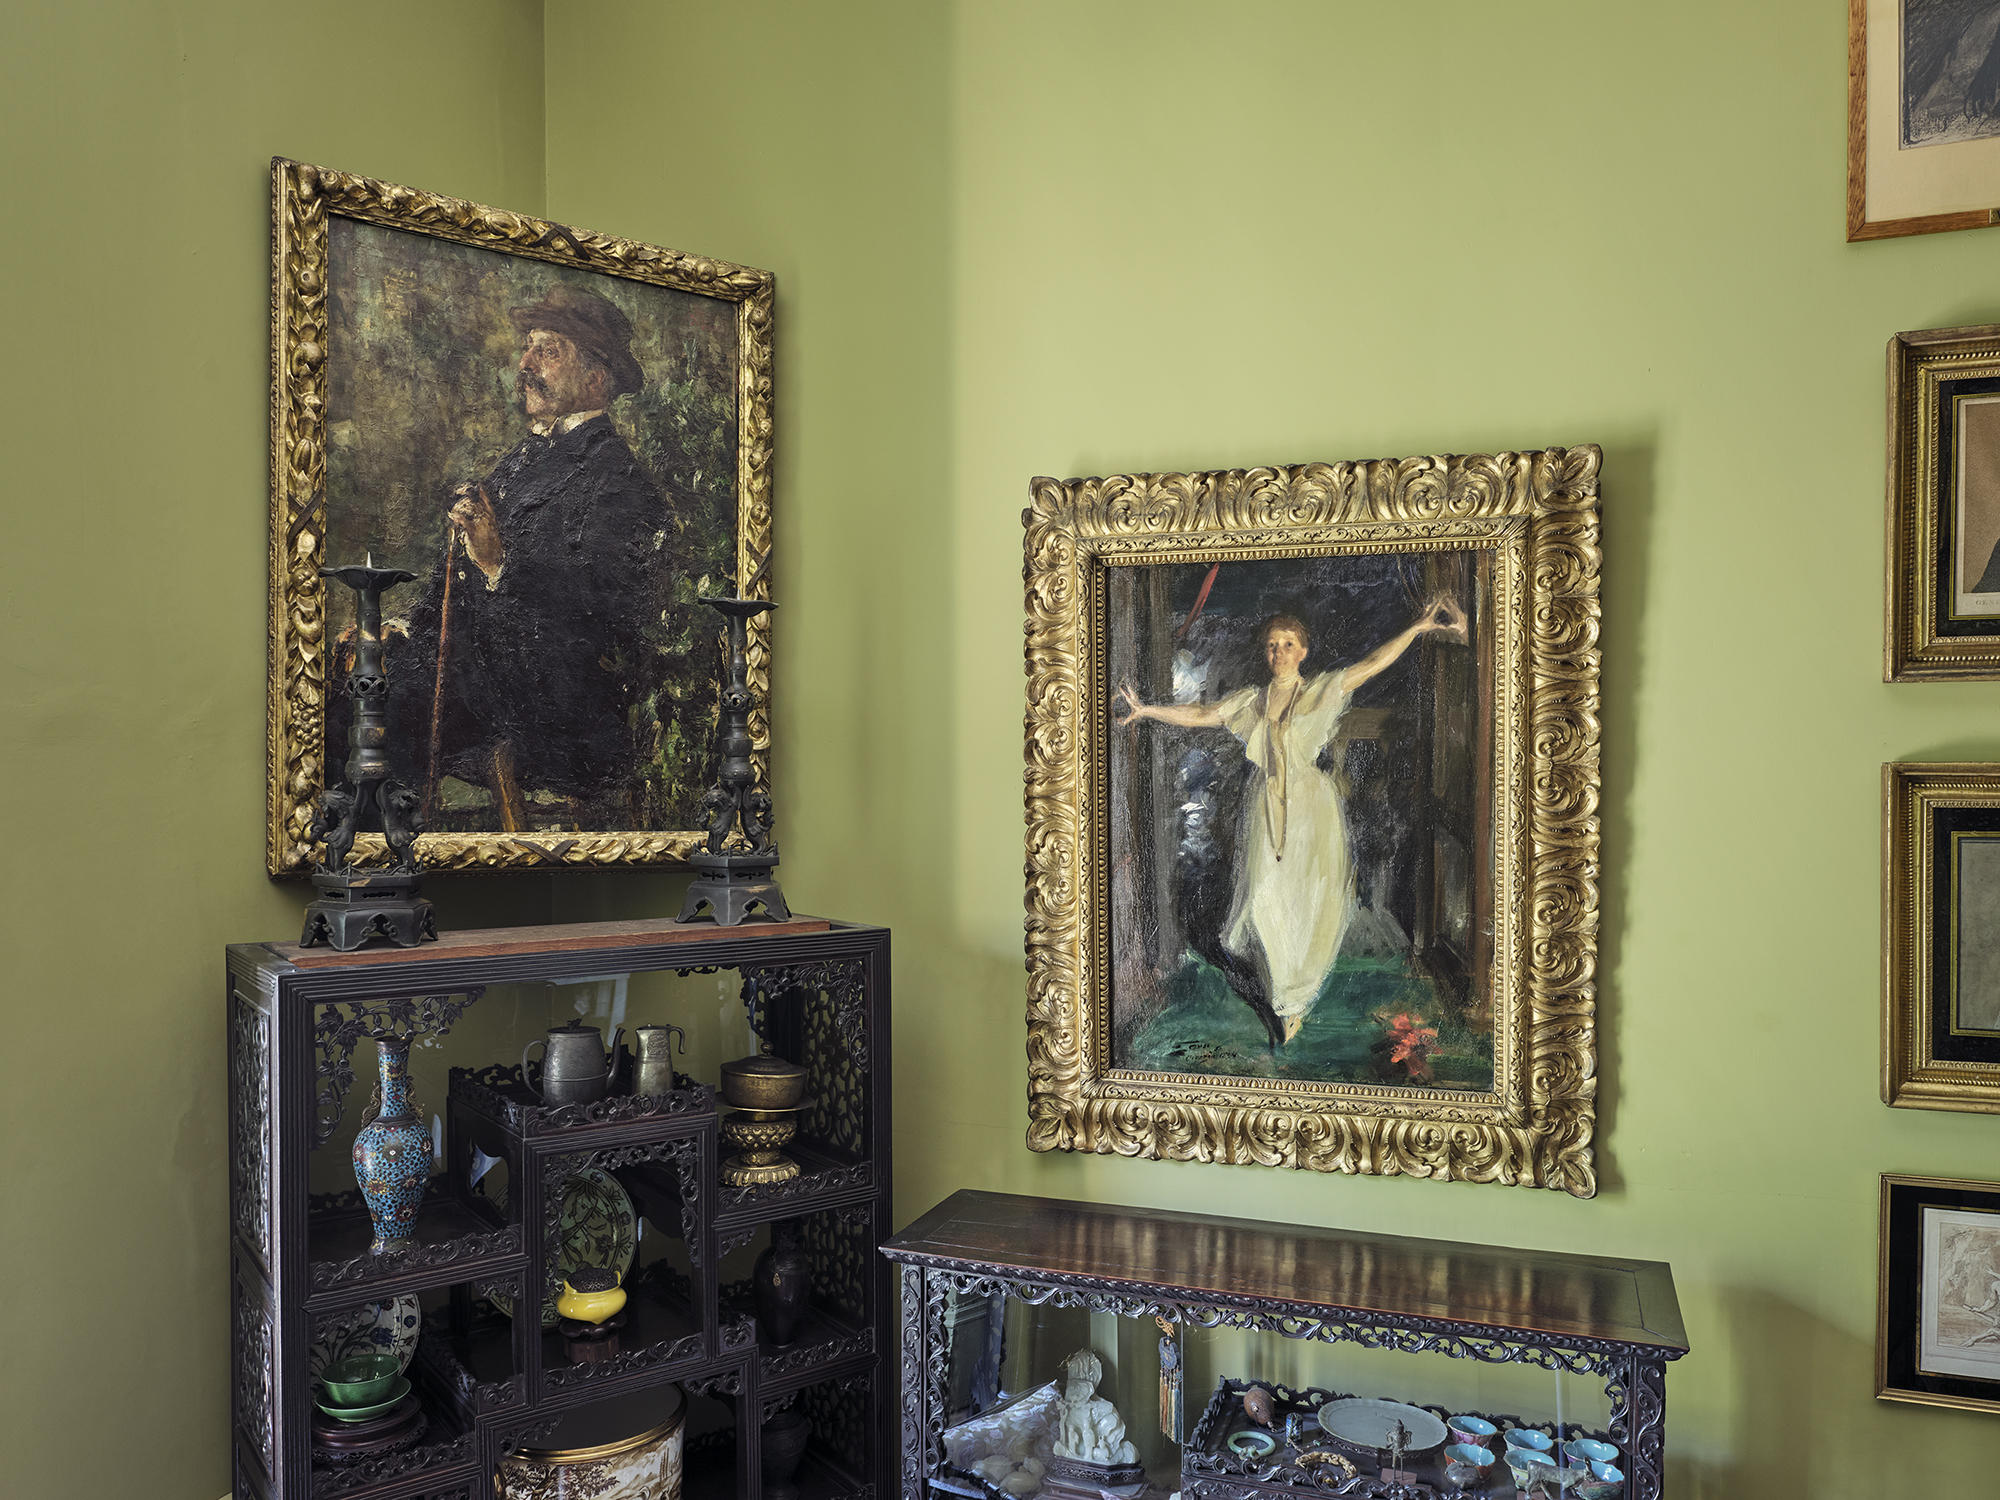 Portraits of John Lowell Gardner and Isabella Stewart Gardner in a corner of a room.